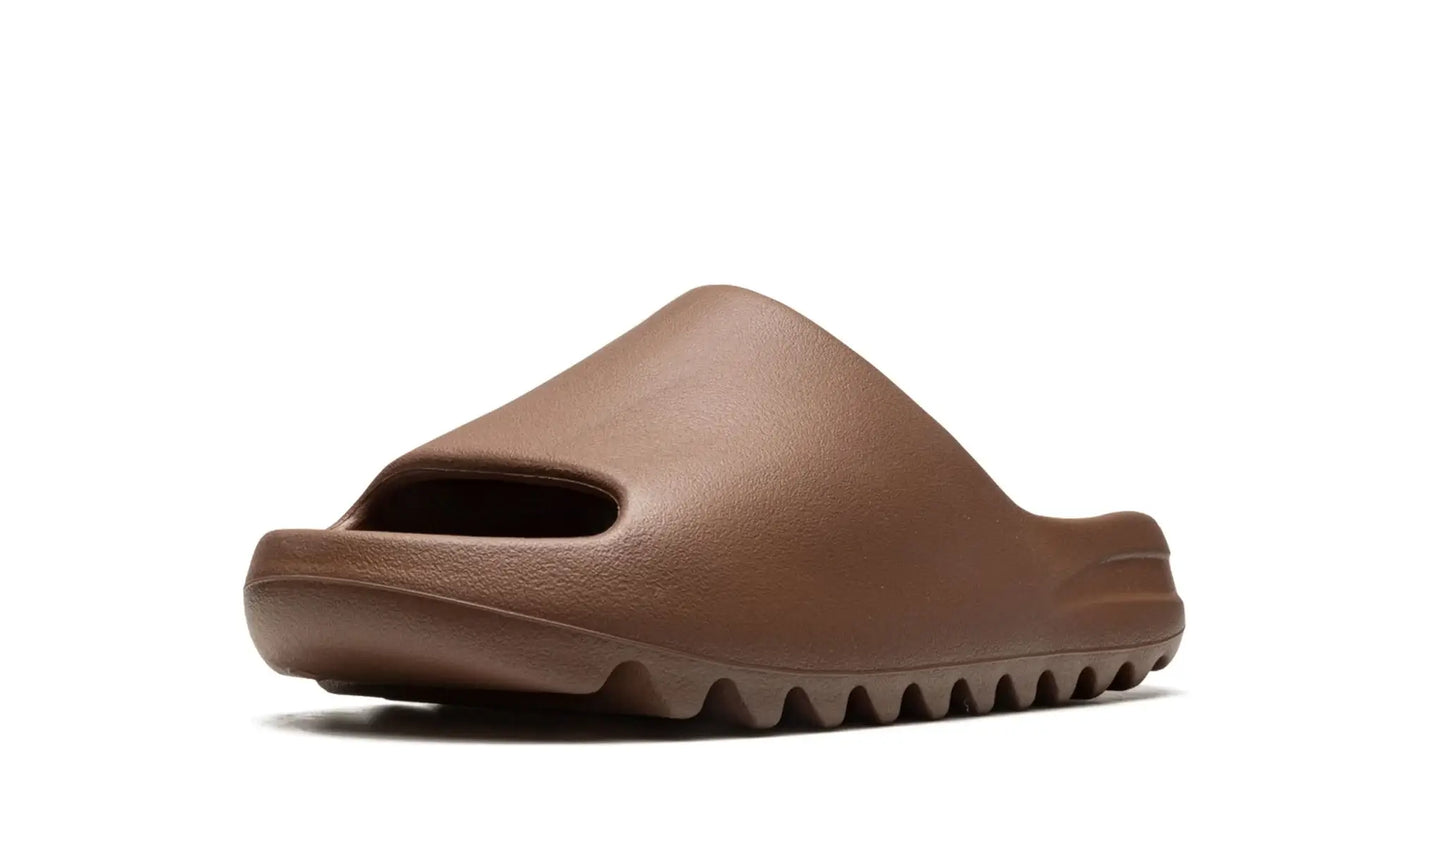 Adidas Yeezy Slide "Flax" Marrom